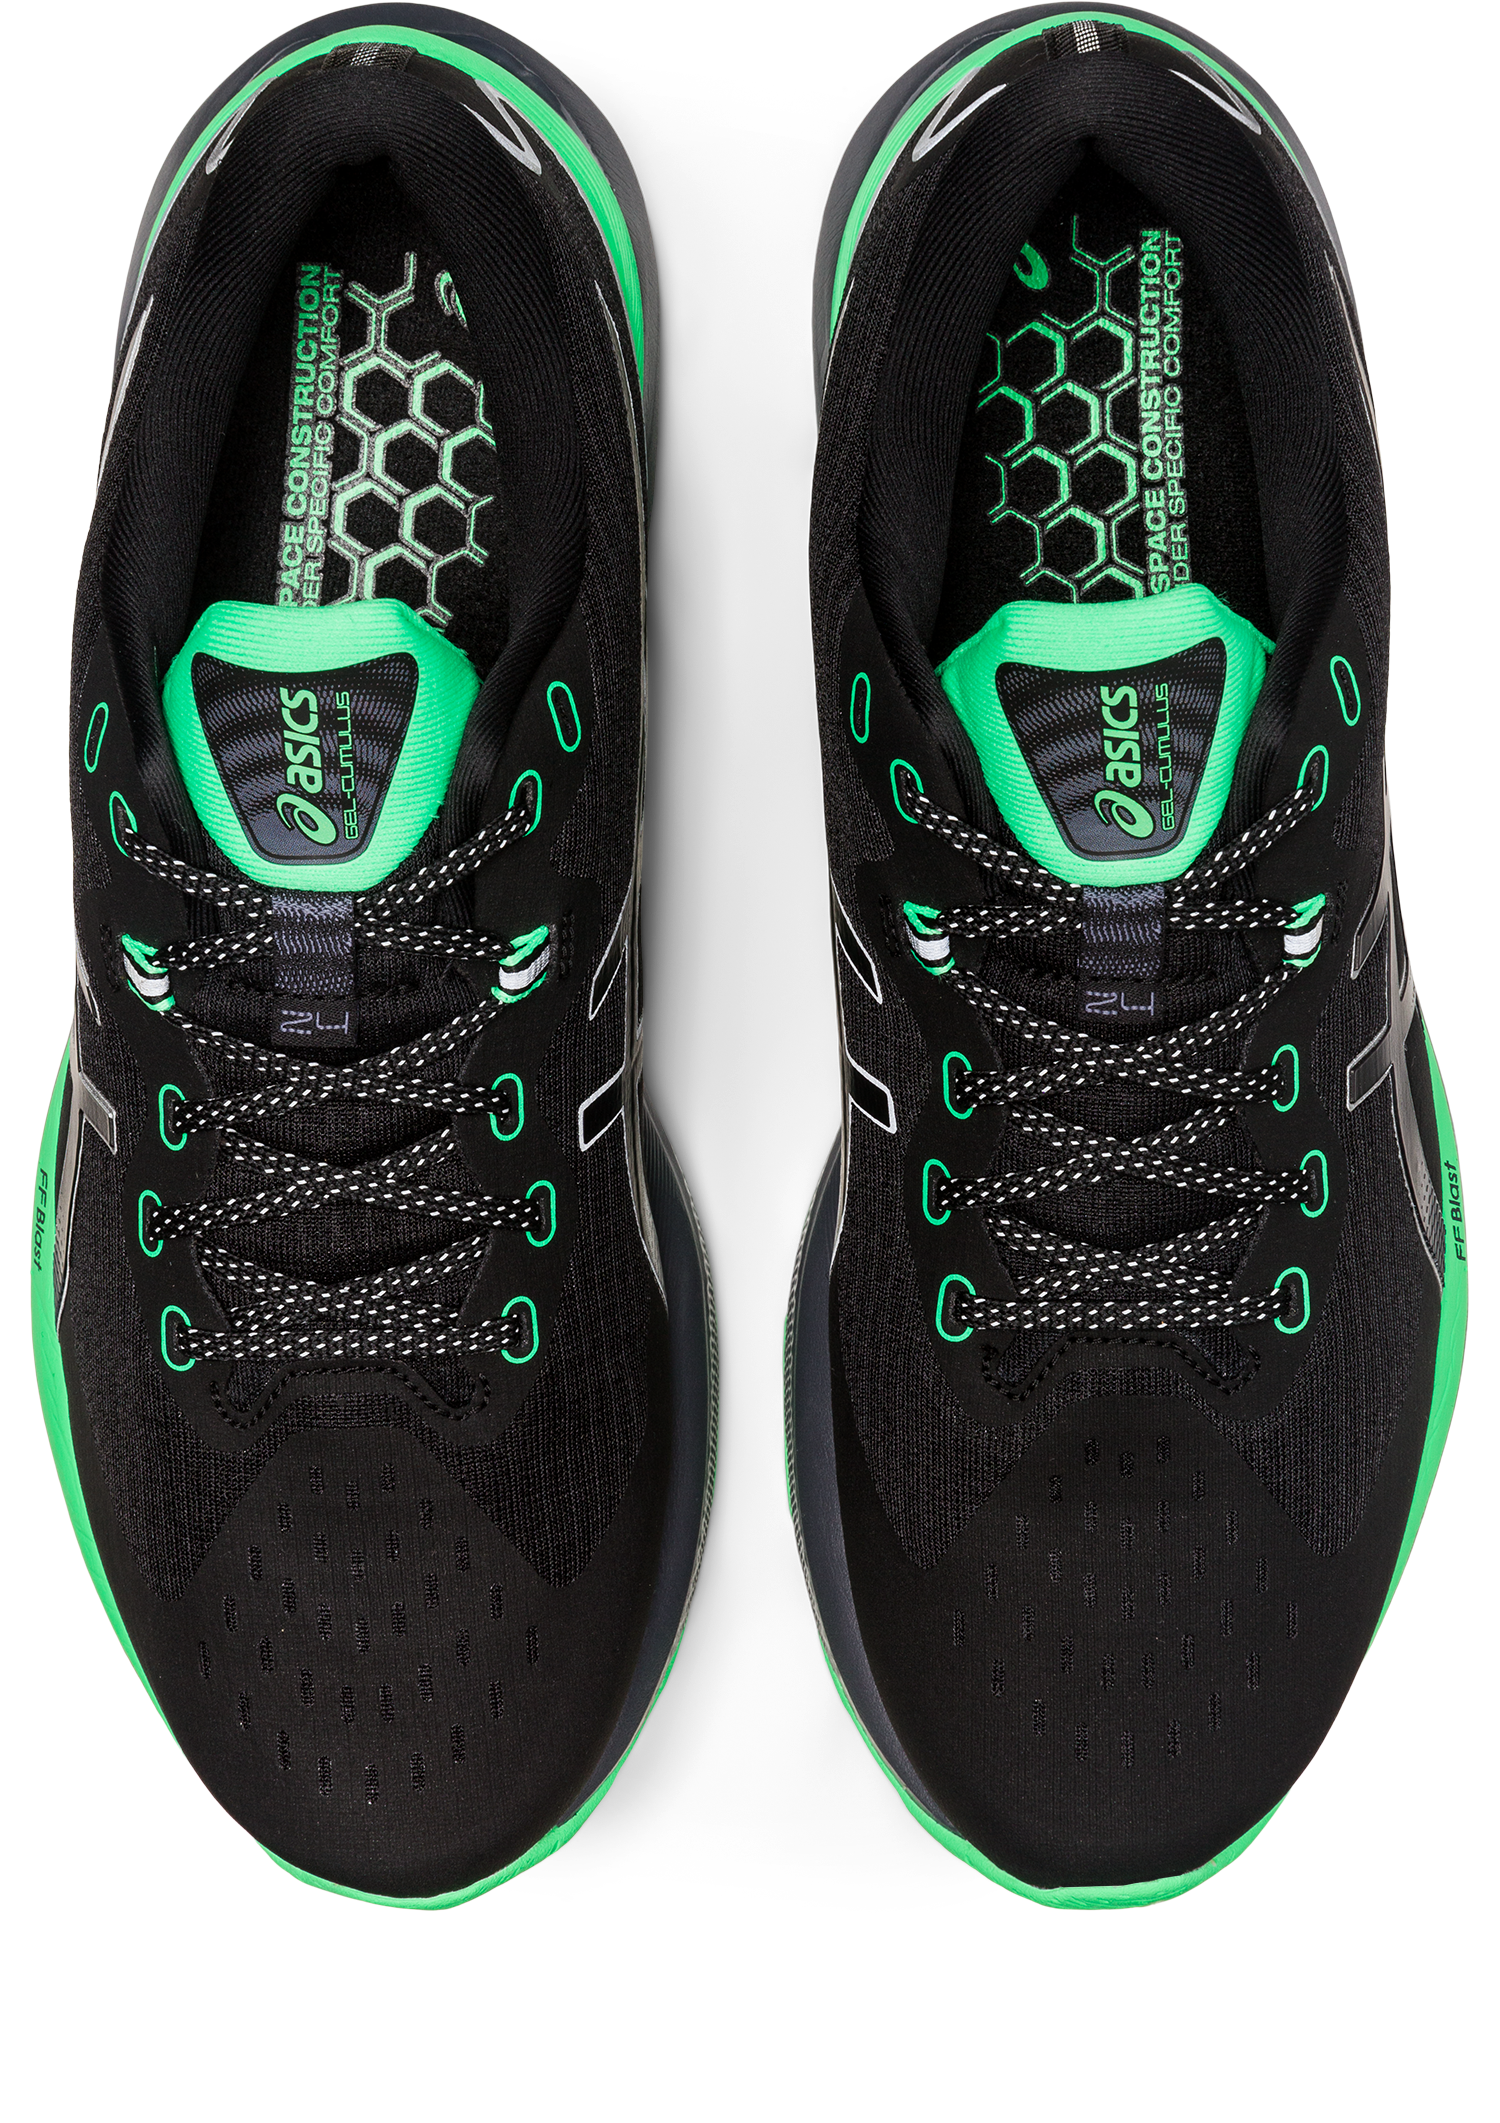 Asics Men's Gel-Cumulus 24 Lite-Show Running Shoes in Black/New Leaf